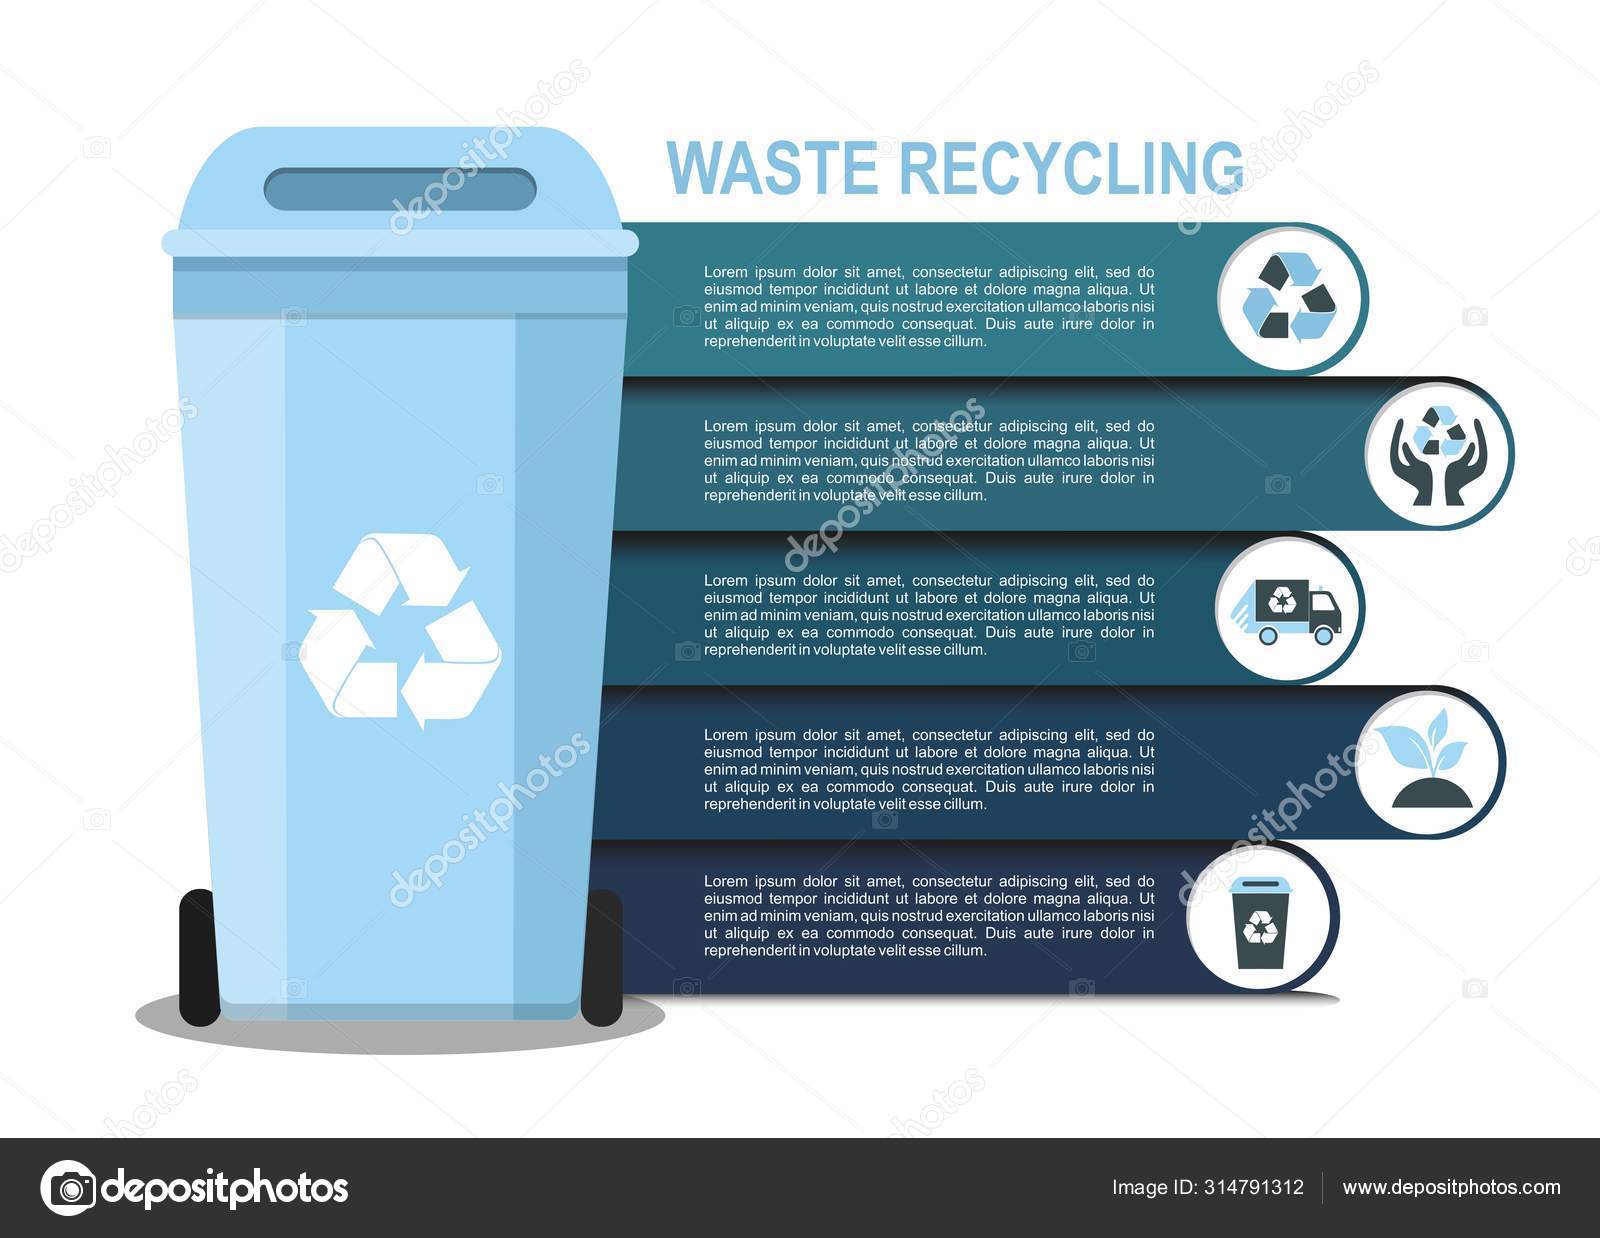 https://st4.depositphotos.com/13662830/31479/v/1600/depositphotos_314791312-stock-illustration-rubbish-bin-for-recycling-different.jpg